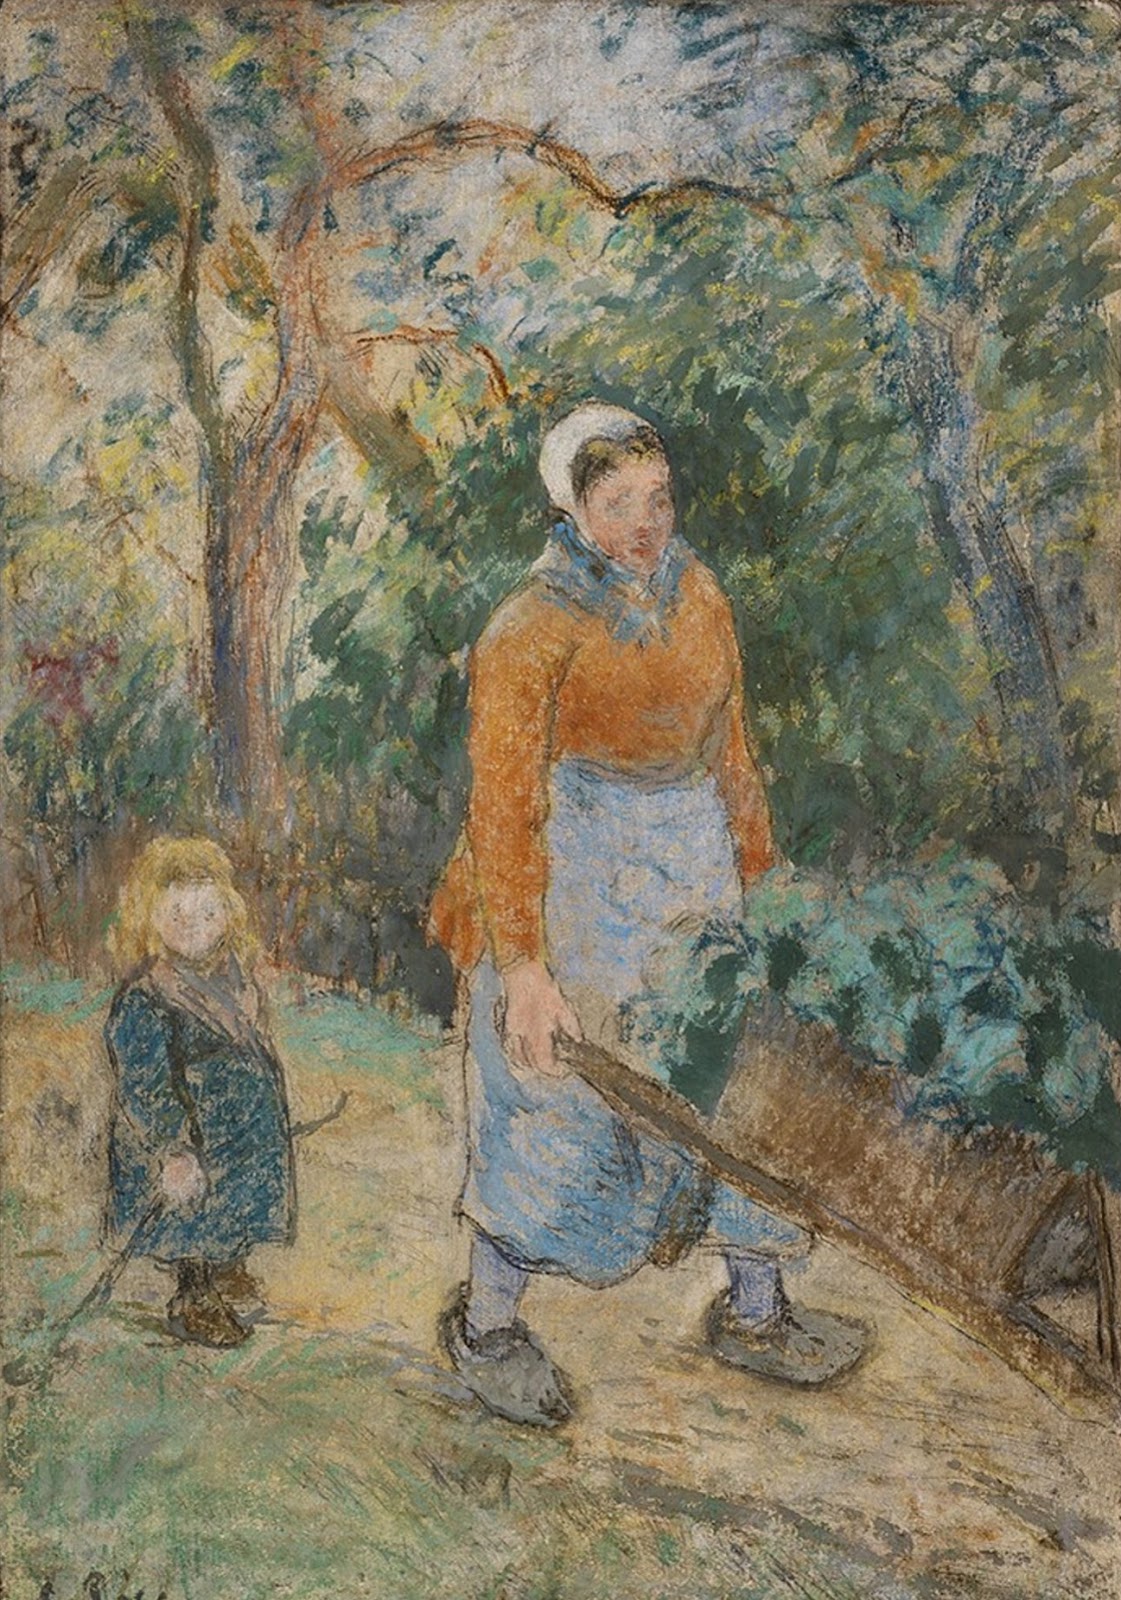 Camille+Pissarro-1830-1903 (202).jpg